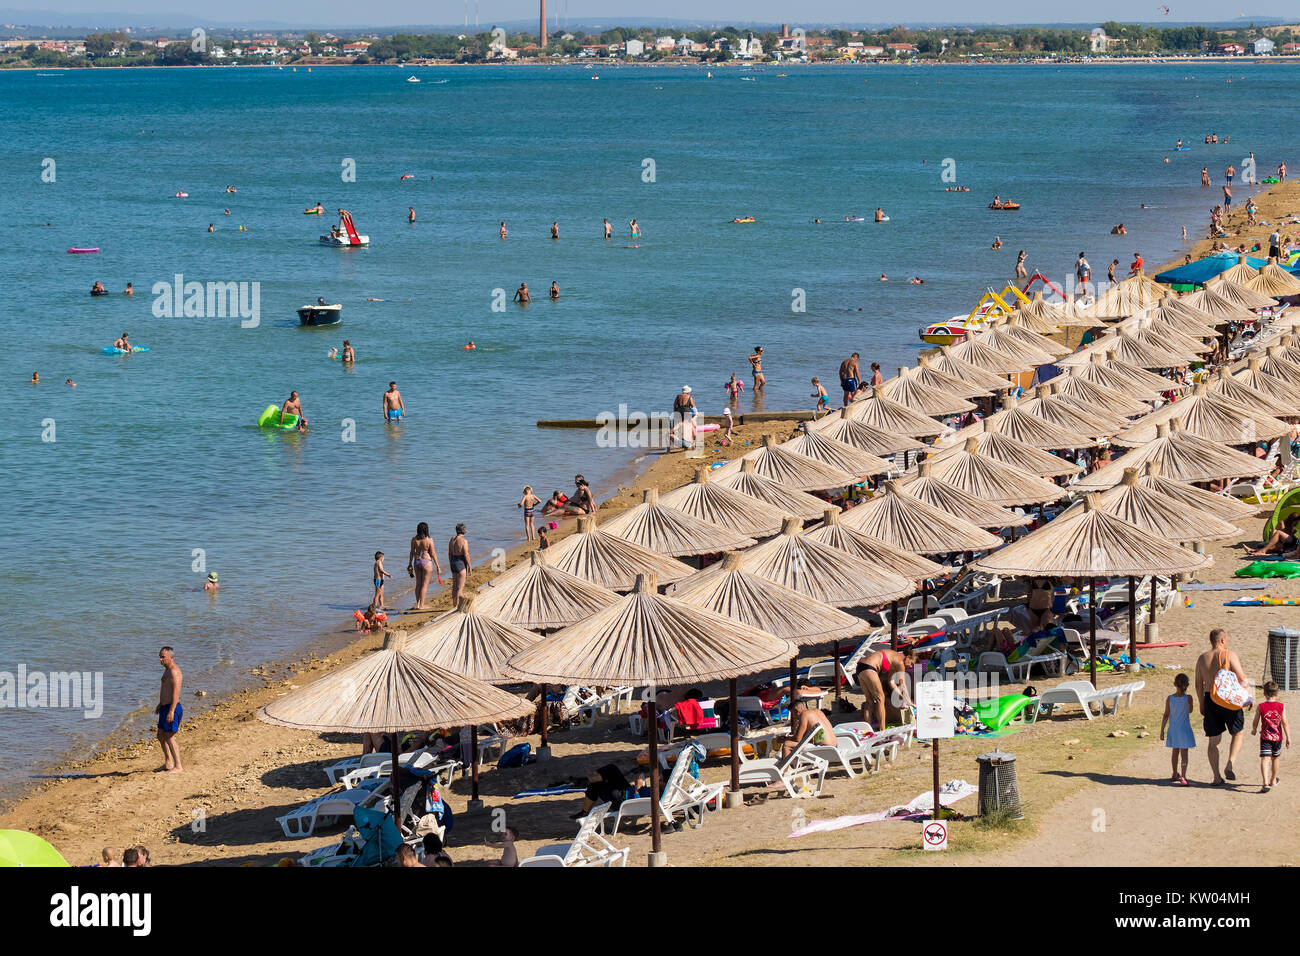 Nin beach croatia -Fotos und -Bildmaterial in hoher Auflösung – Alamy